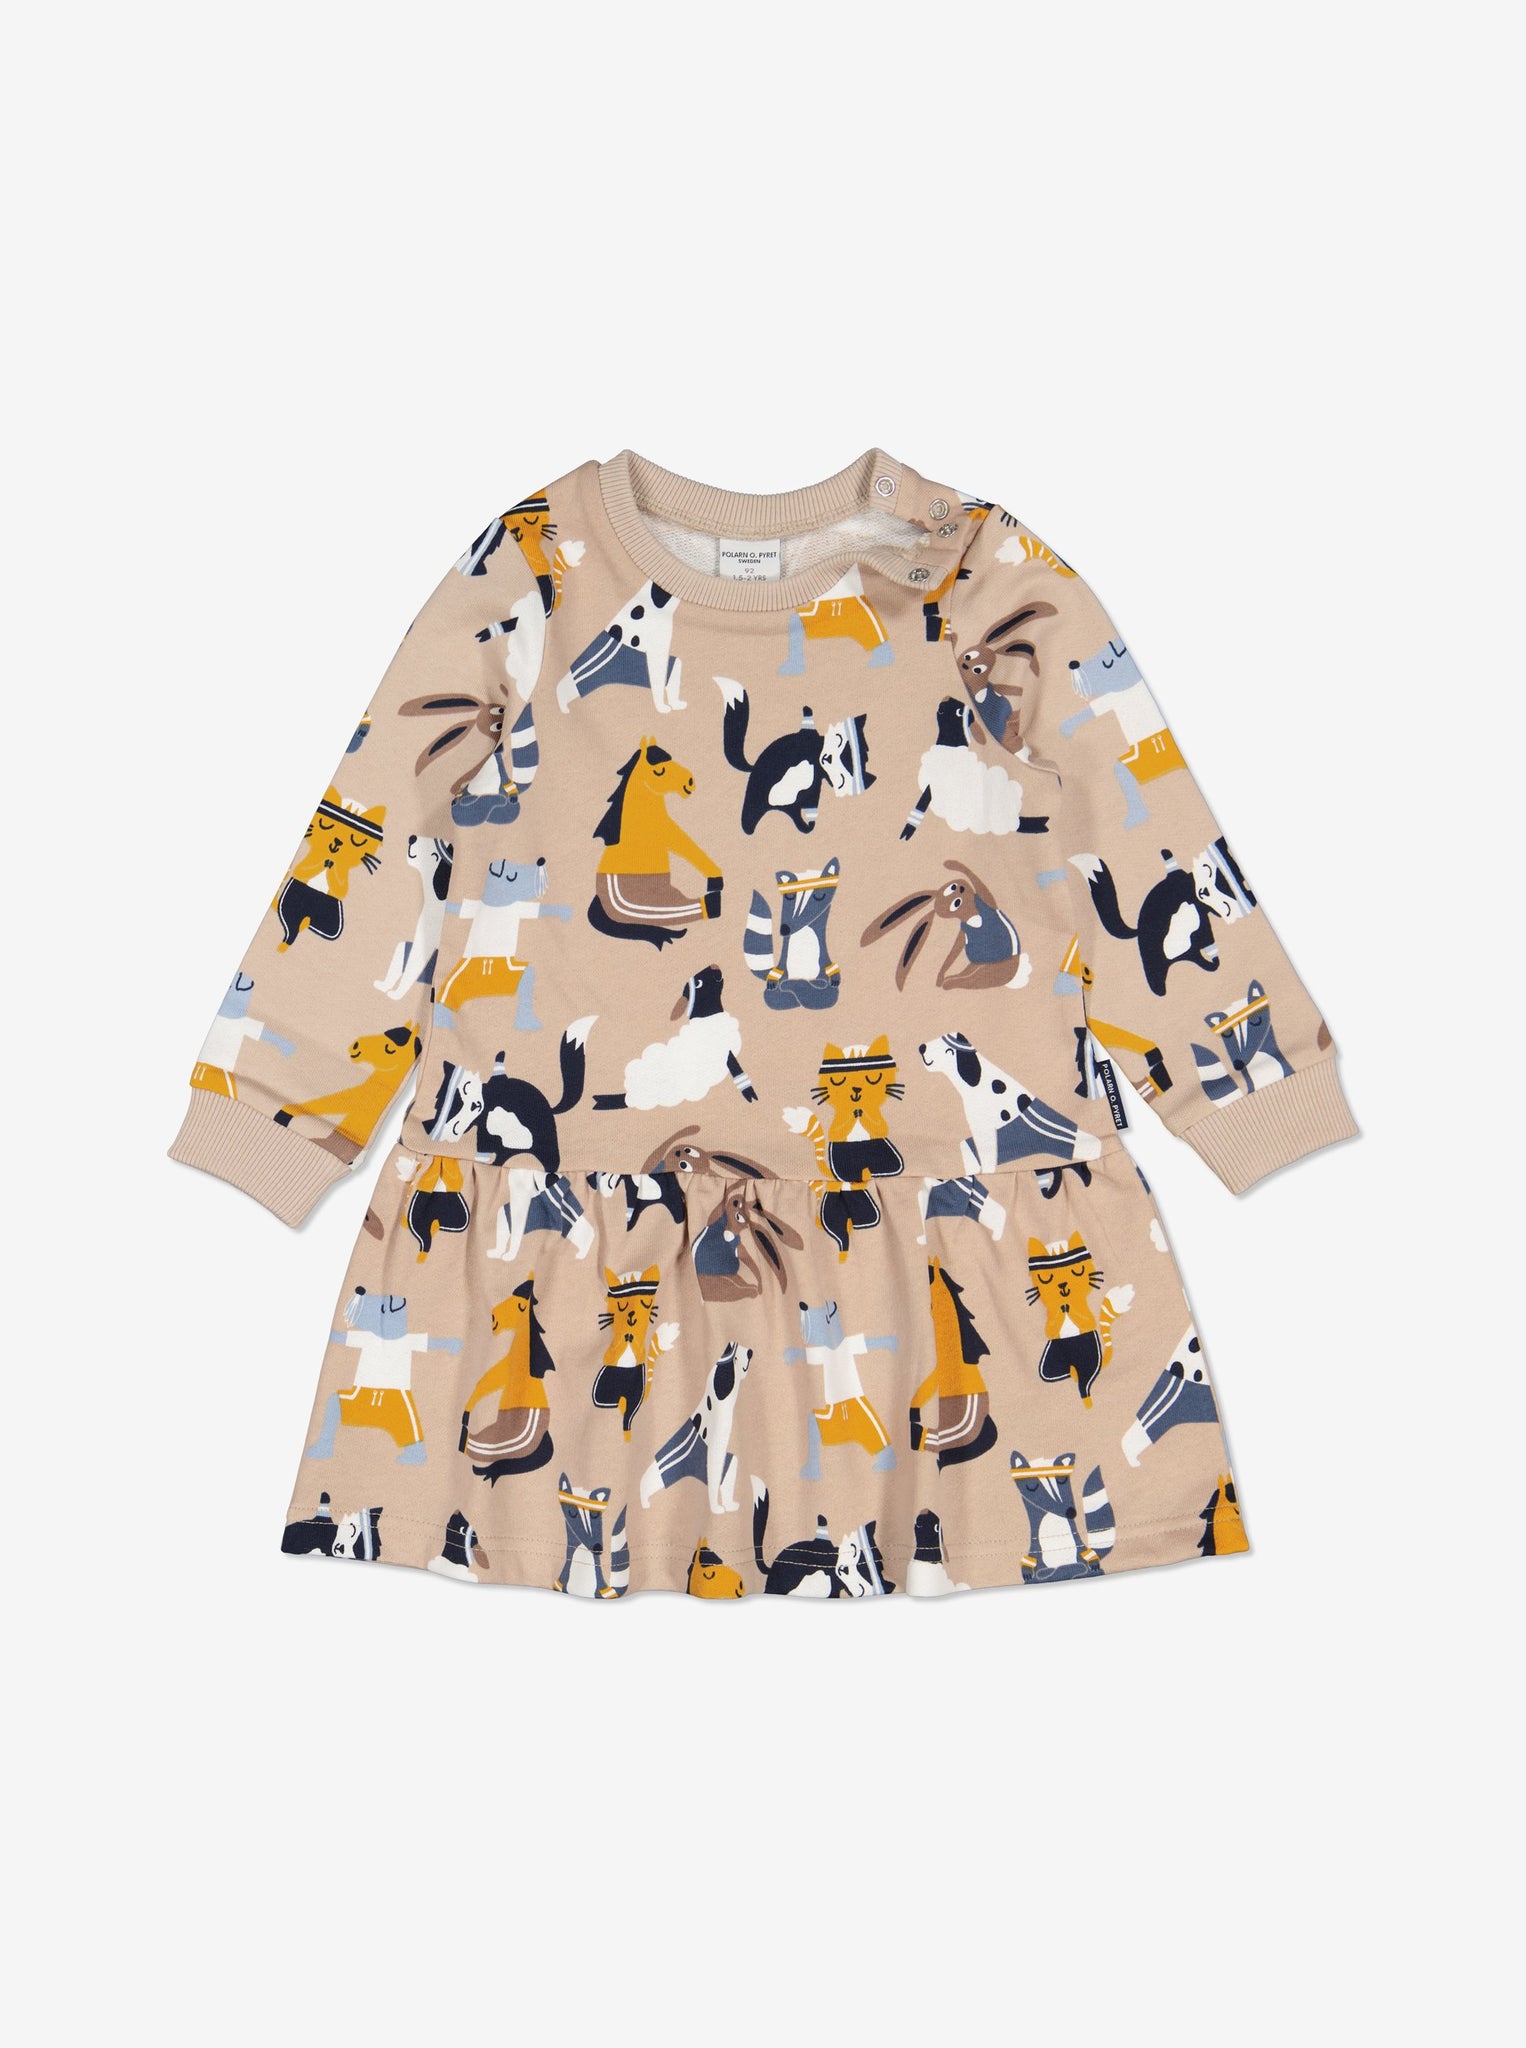  Organic Animal Print Girls Dress from Polarn O. Pyret Kidswear. Made with 100% organic cotton.